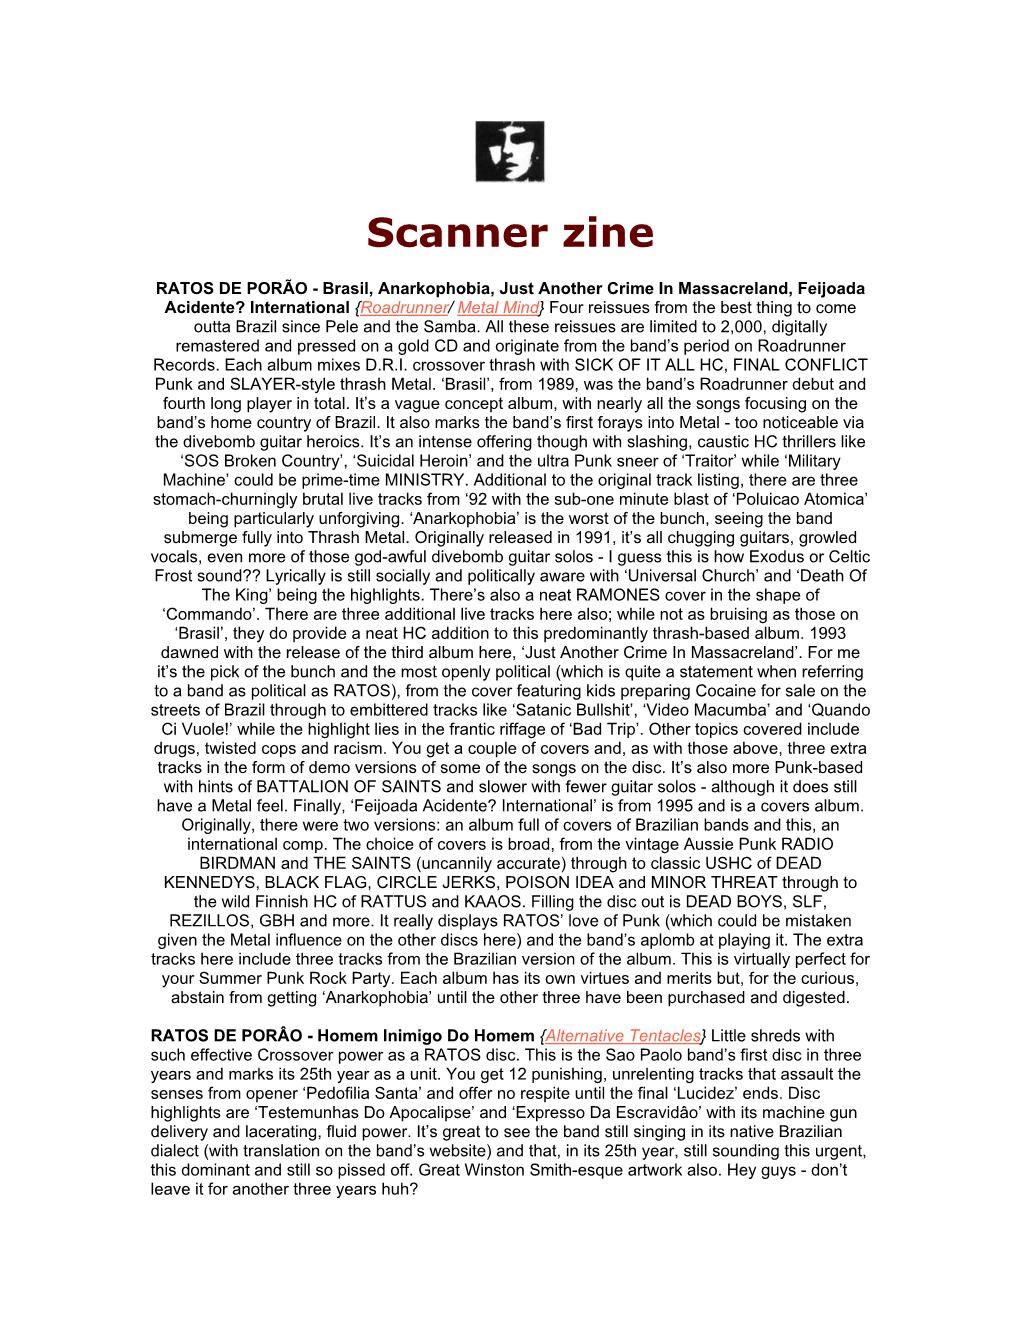 Scanner Zine